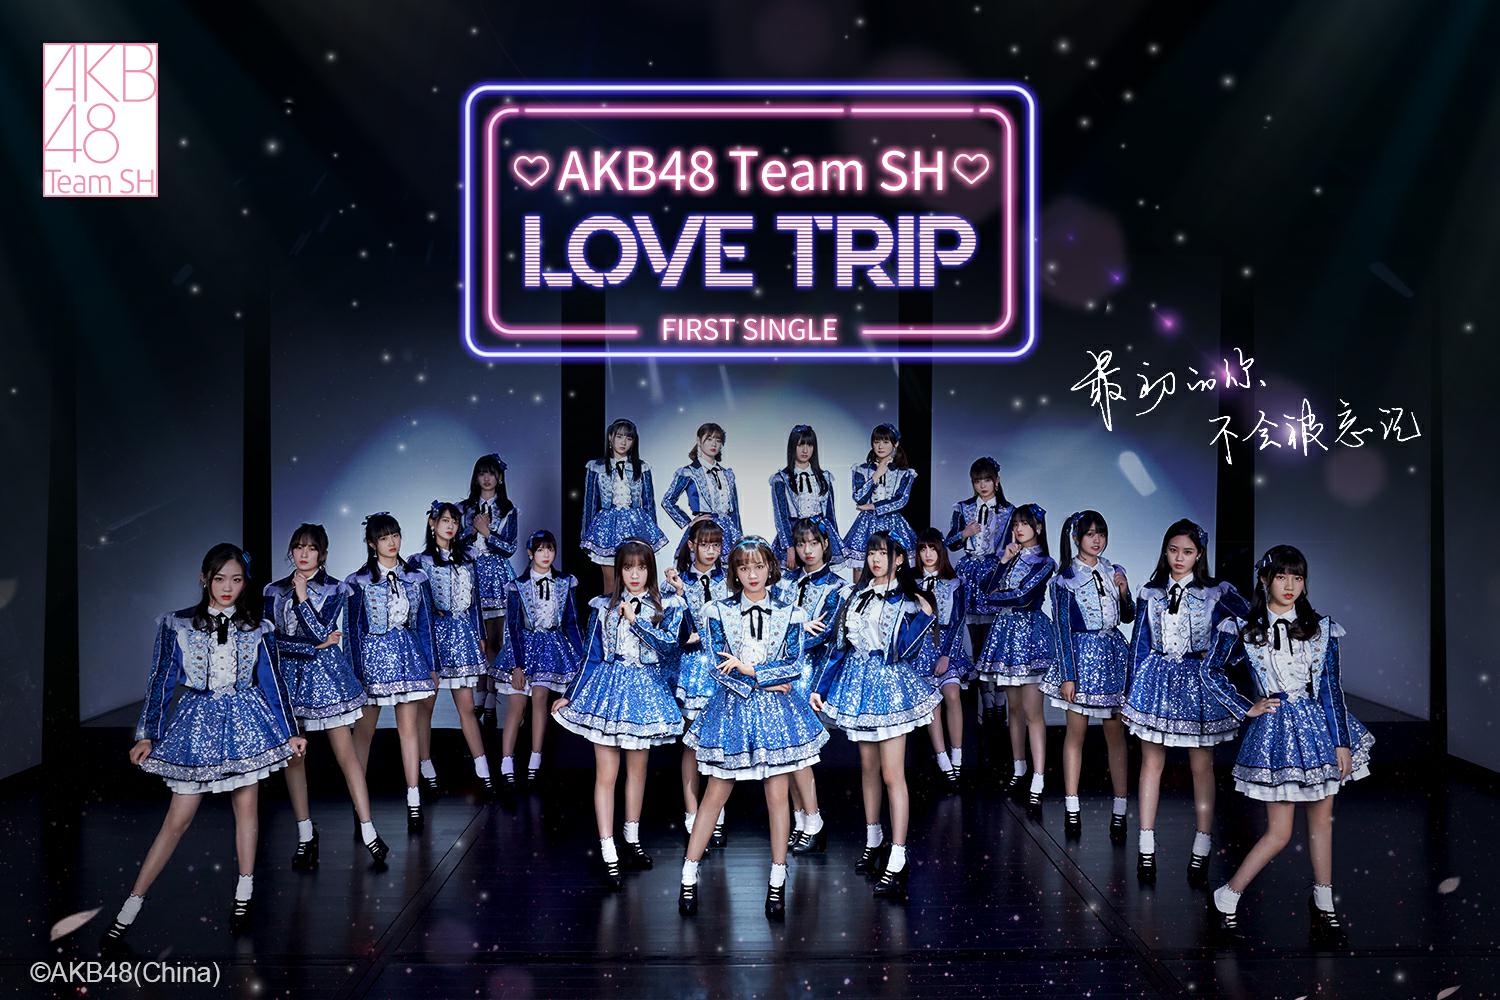 LOVE TRIP/分享幸福(AKB48 Team SH出道單曲)